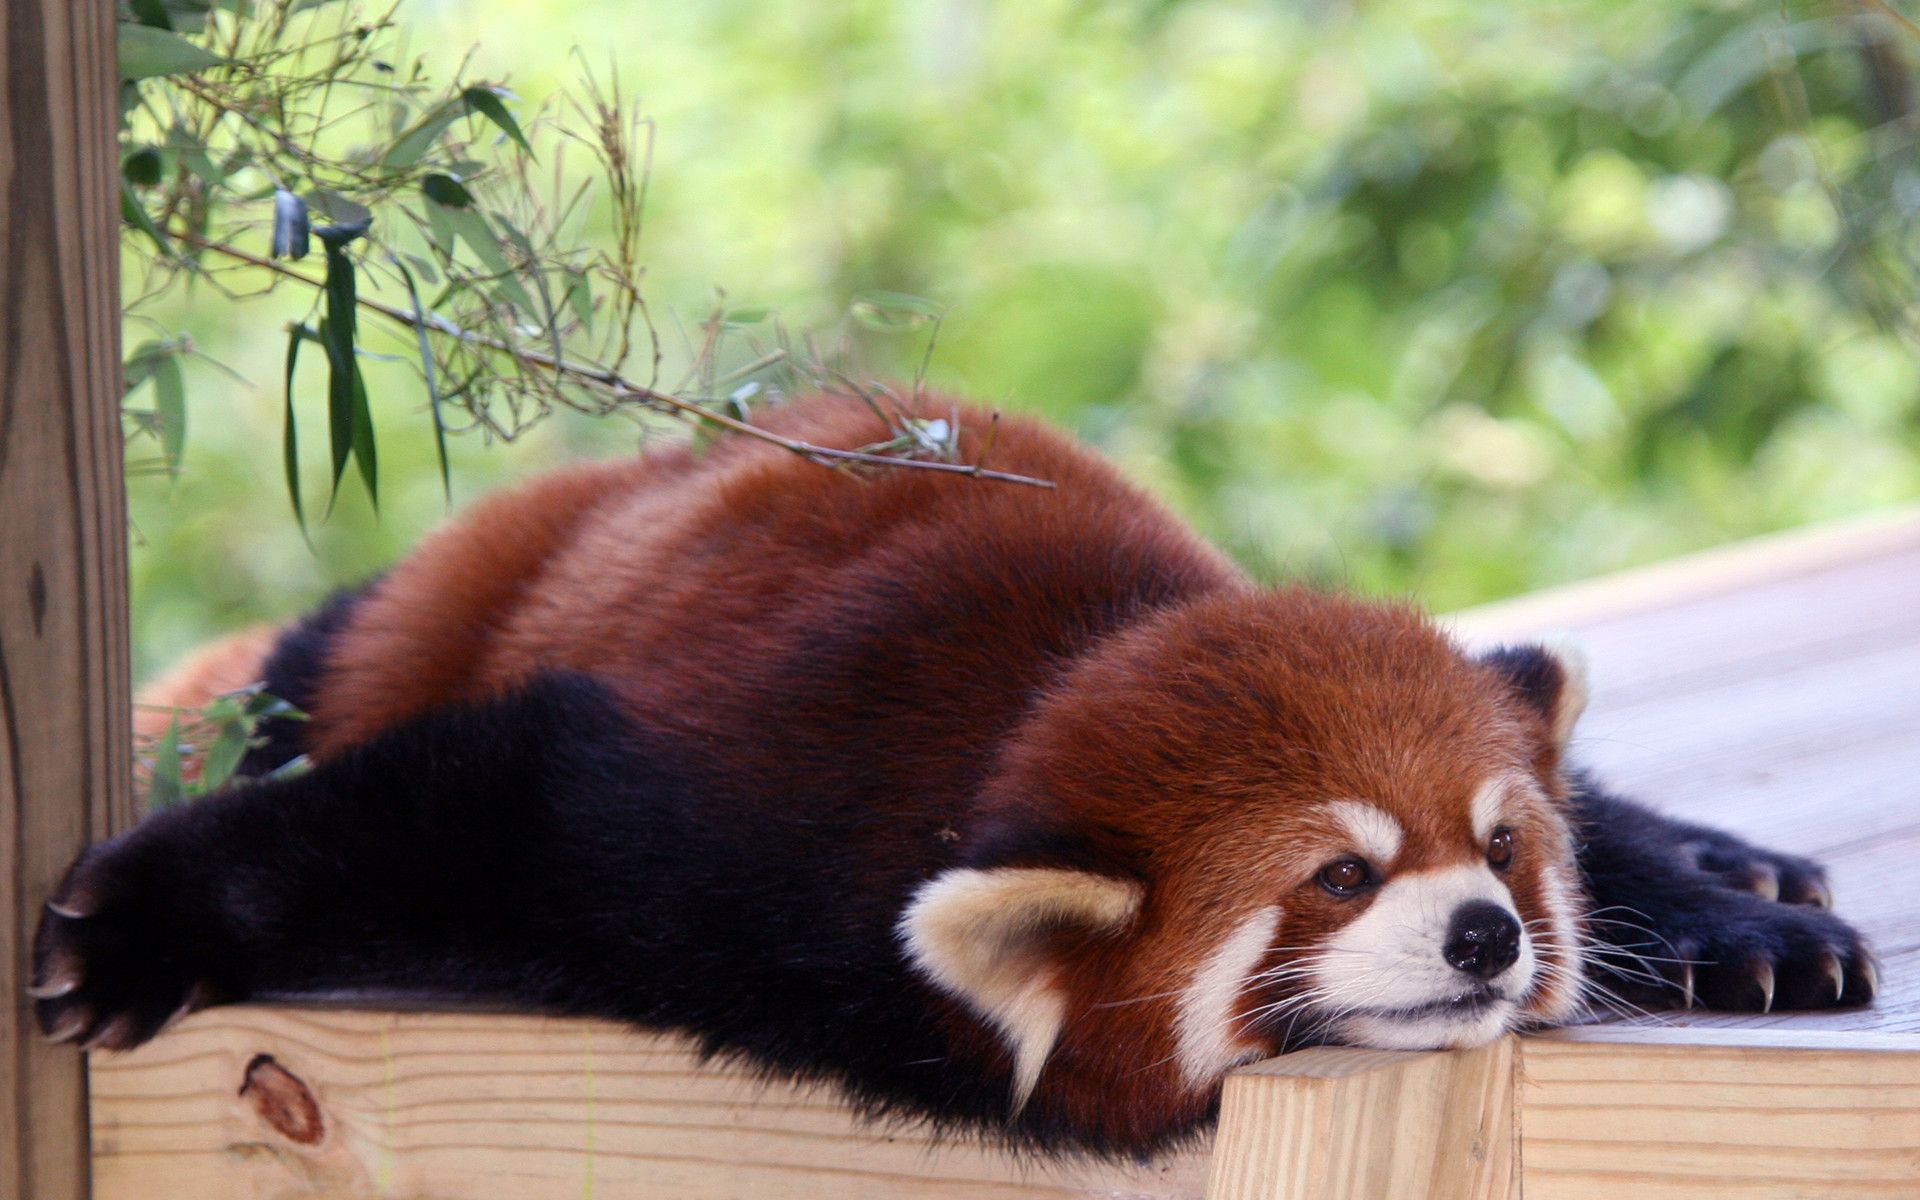 Best Of Cute Baby Adorable Panda Wallpaper Red Panda Cartoon Image picture